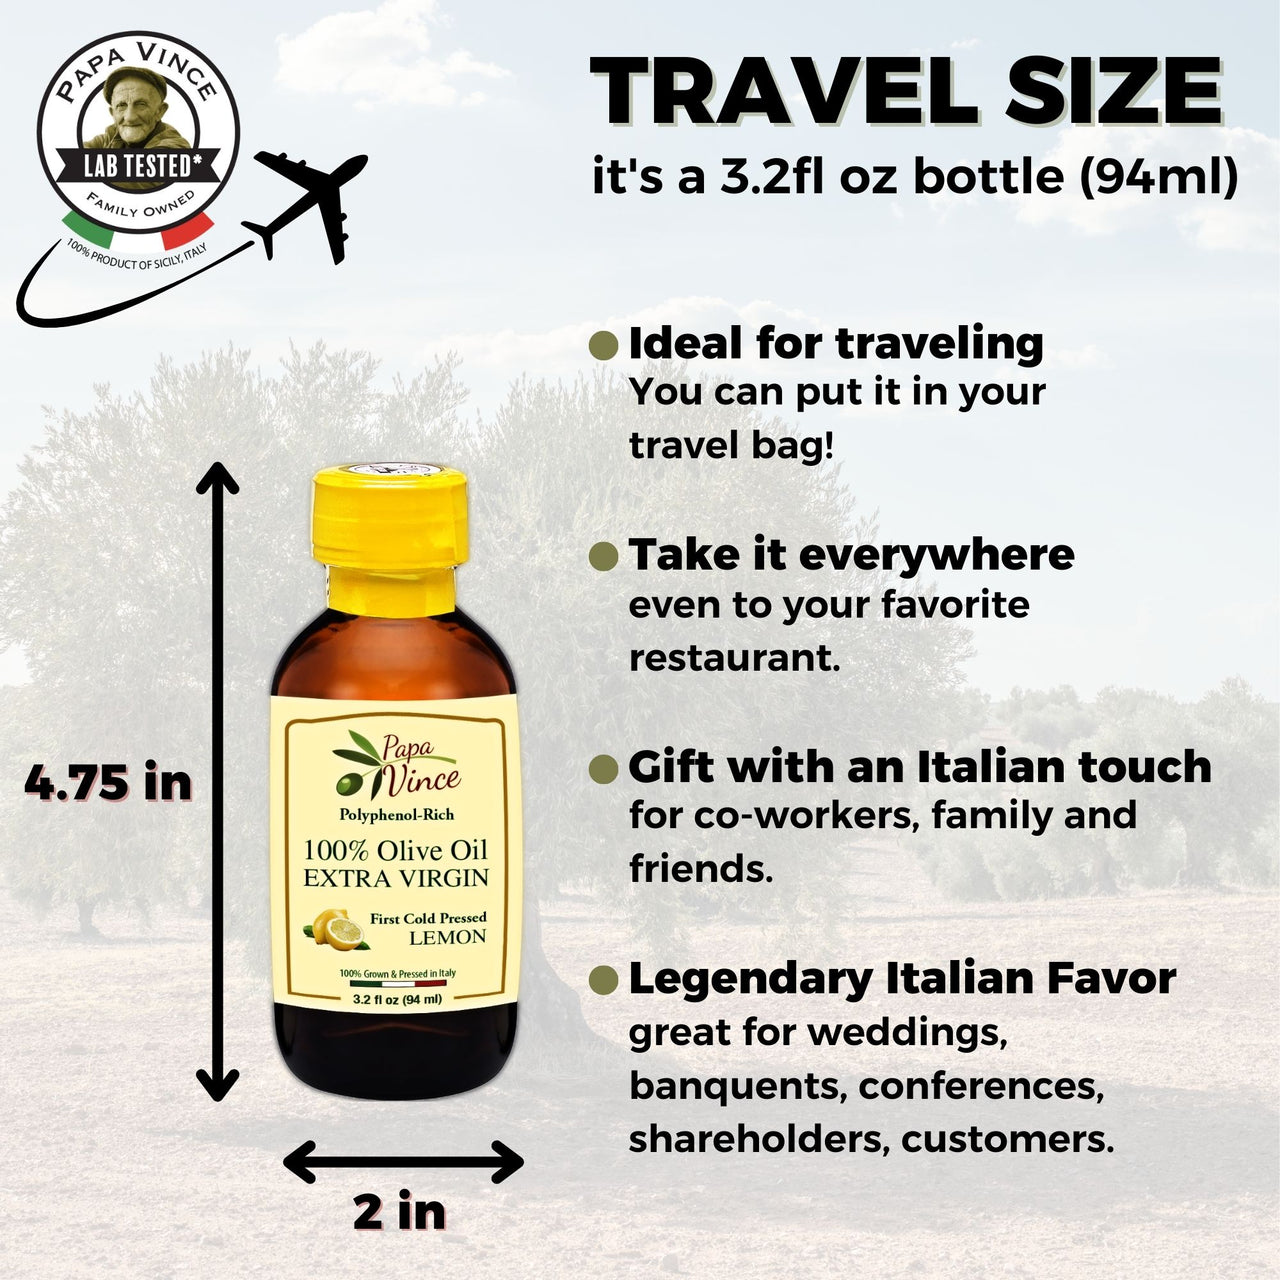 Flavored Olive Oil Extra Virgin Set from Sicily - Classic, Citrus & Lemon Fused Olive Oil Gift | Papa Vince | 3 fl oz each